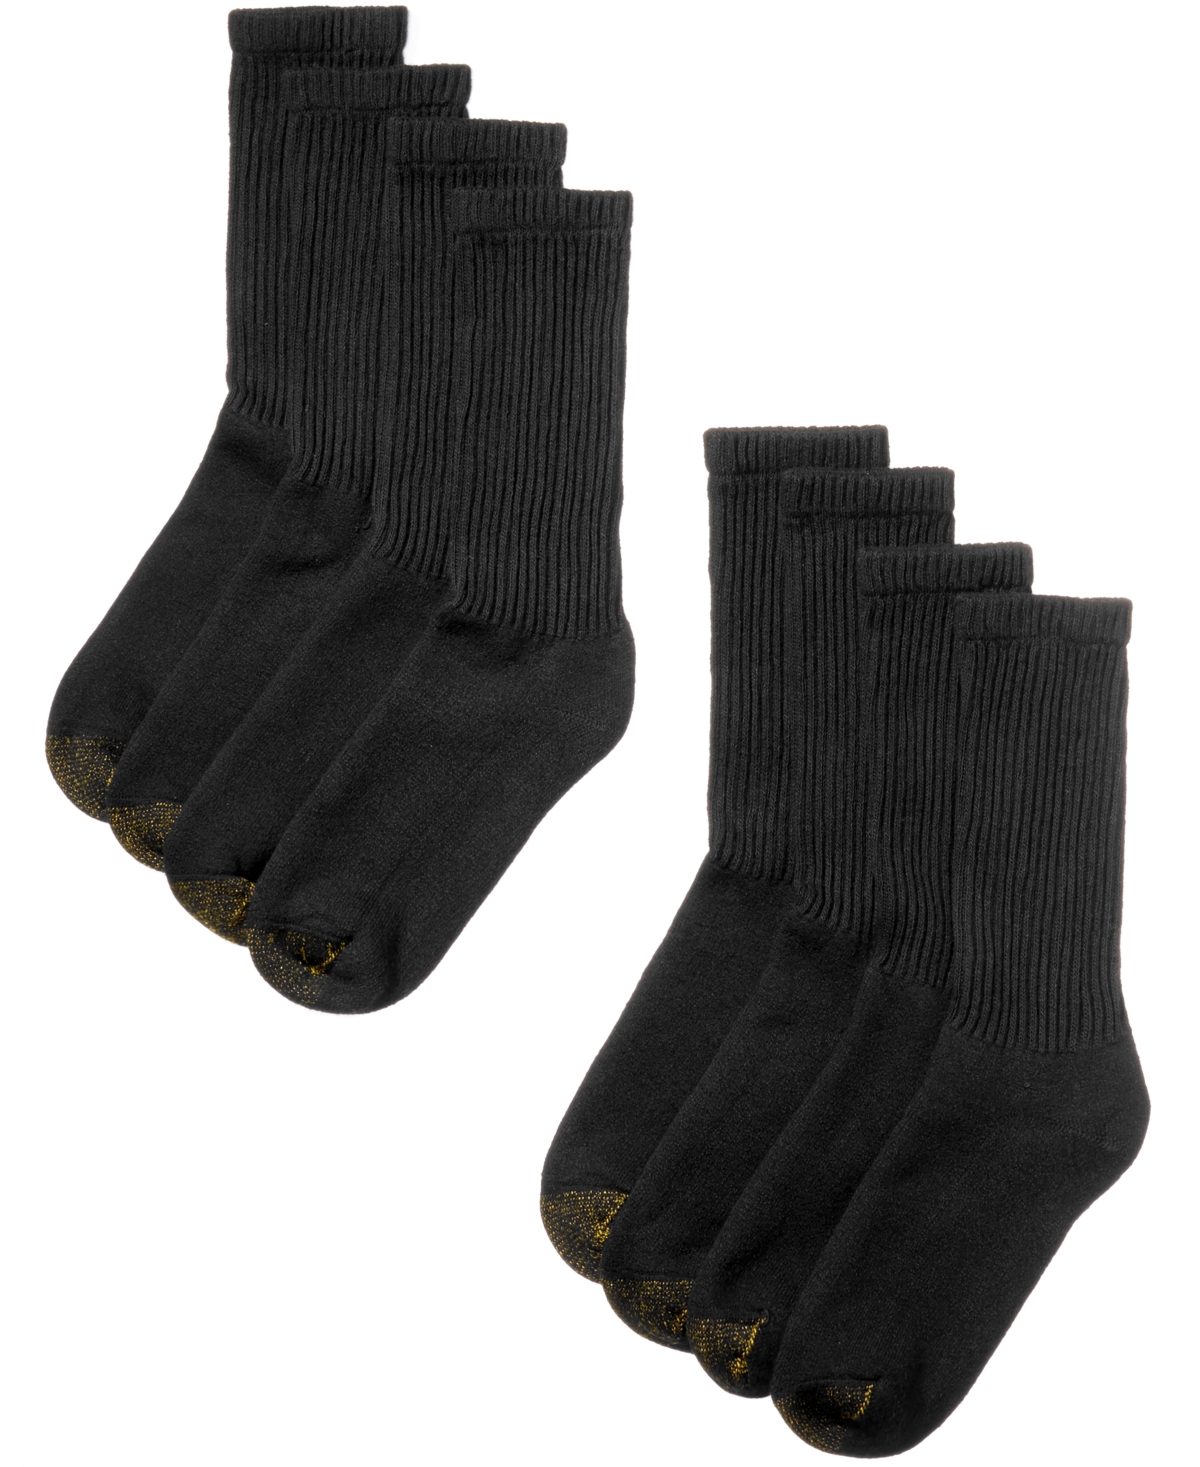 Men's 8-Pack Athletic Crew Socks - Black